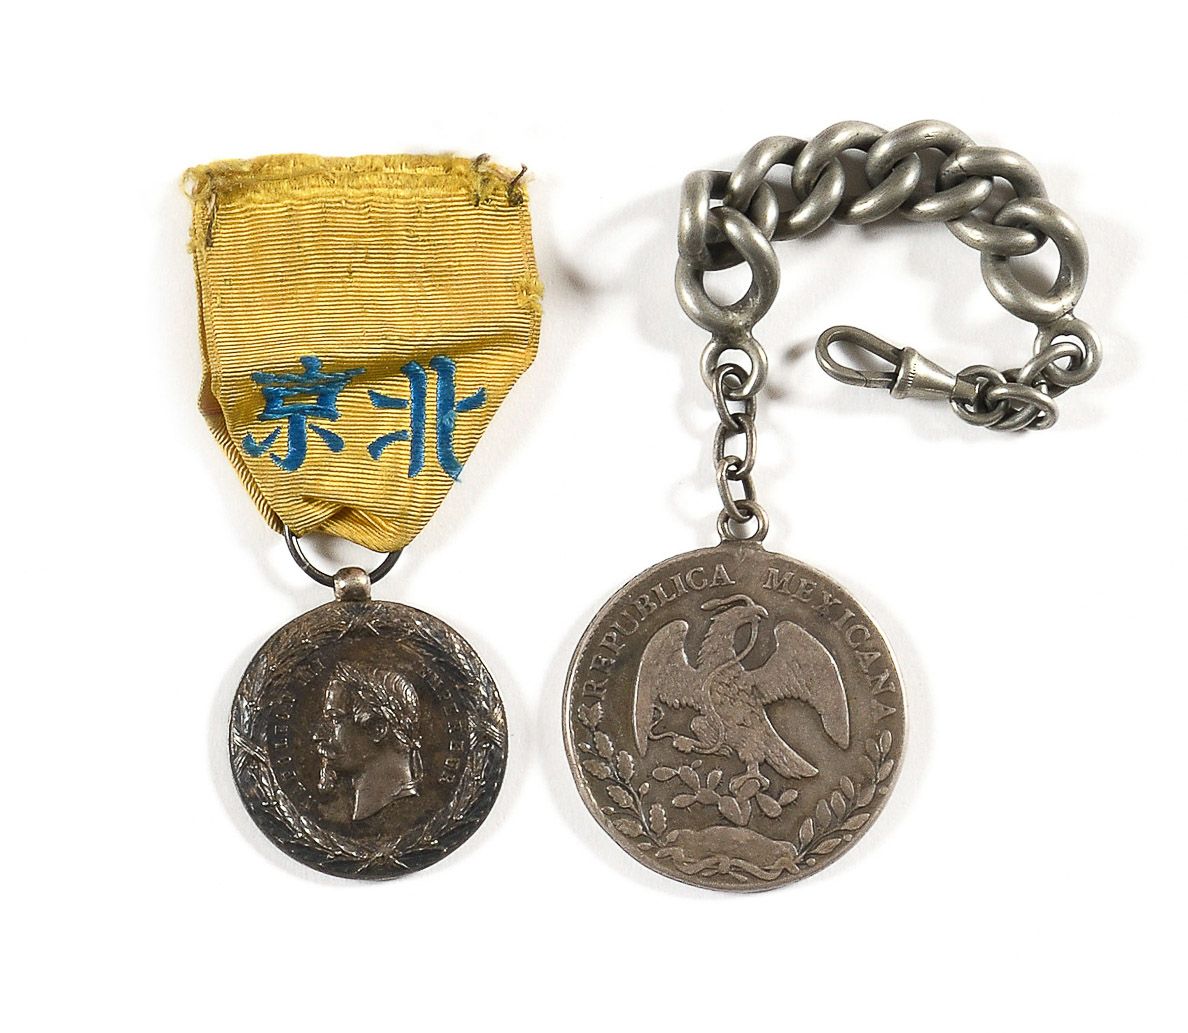 Null 法国

中国战役奖章

银色，没有签名

编织丝带

30毫米

毛重 : 12,3 g

一枚日期为1863年的墨西哥共和国的奖章，安装在一个扣钩上